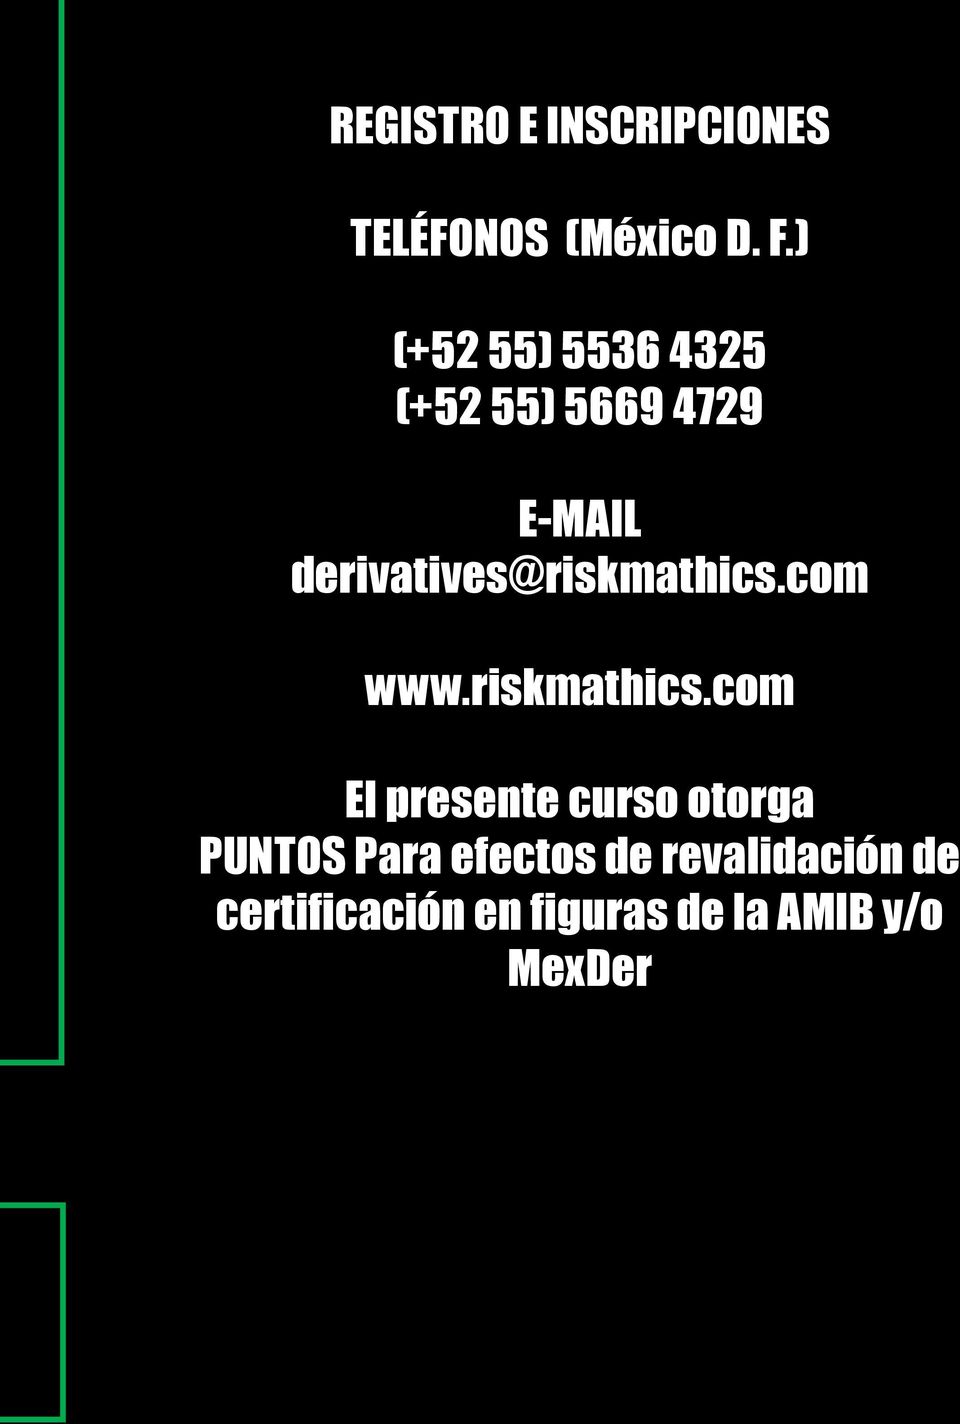 derivatives@riskmathics.